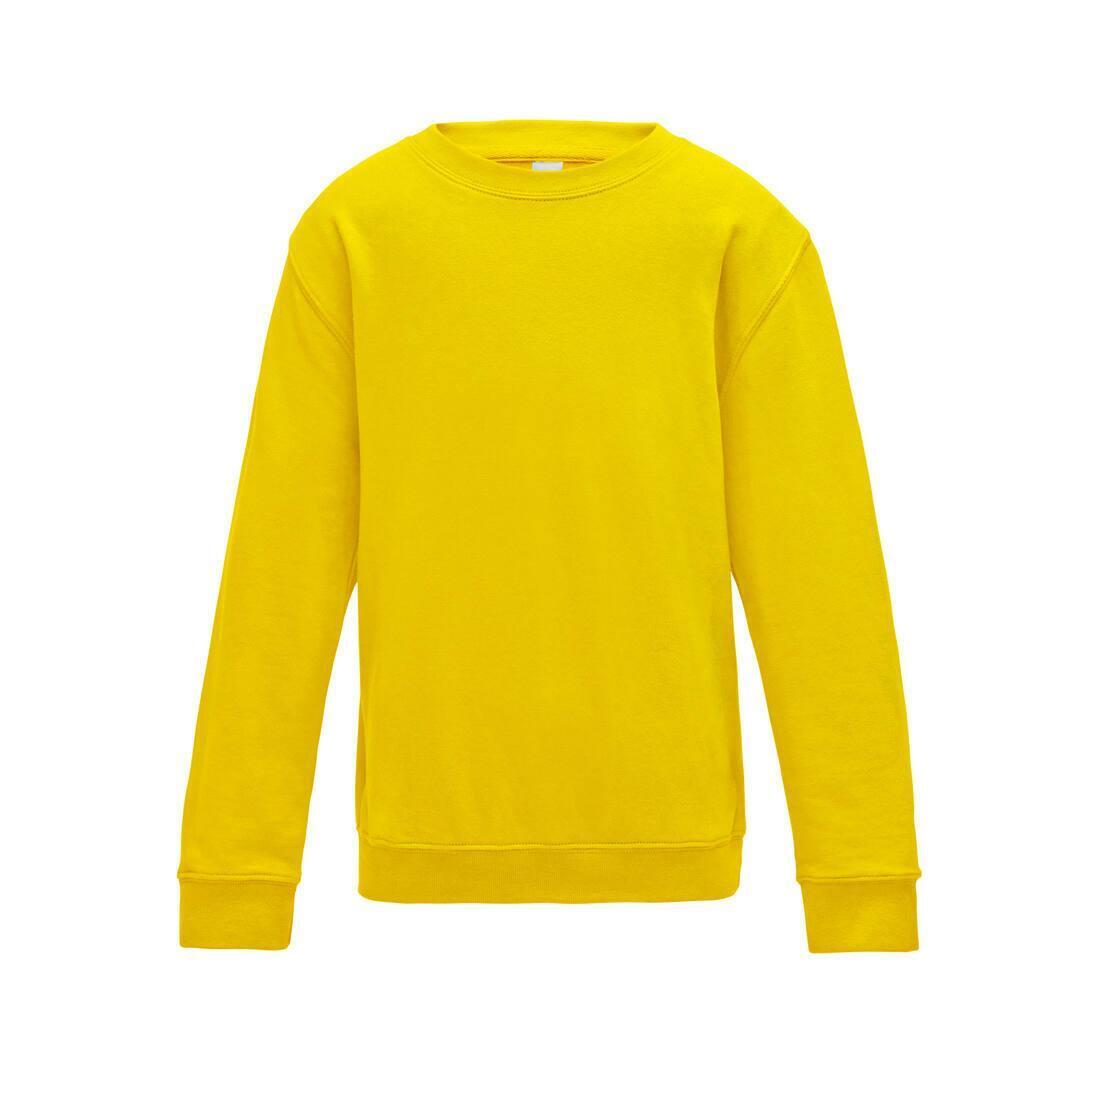 Kinder sweatshirts sun yellow personaliseer je sweatshirts